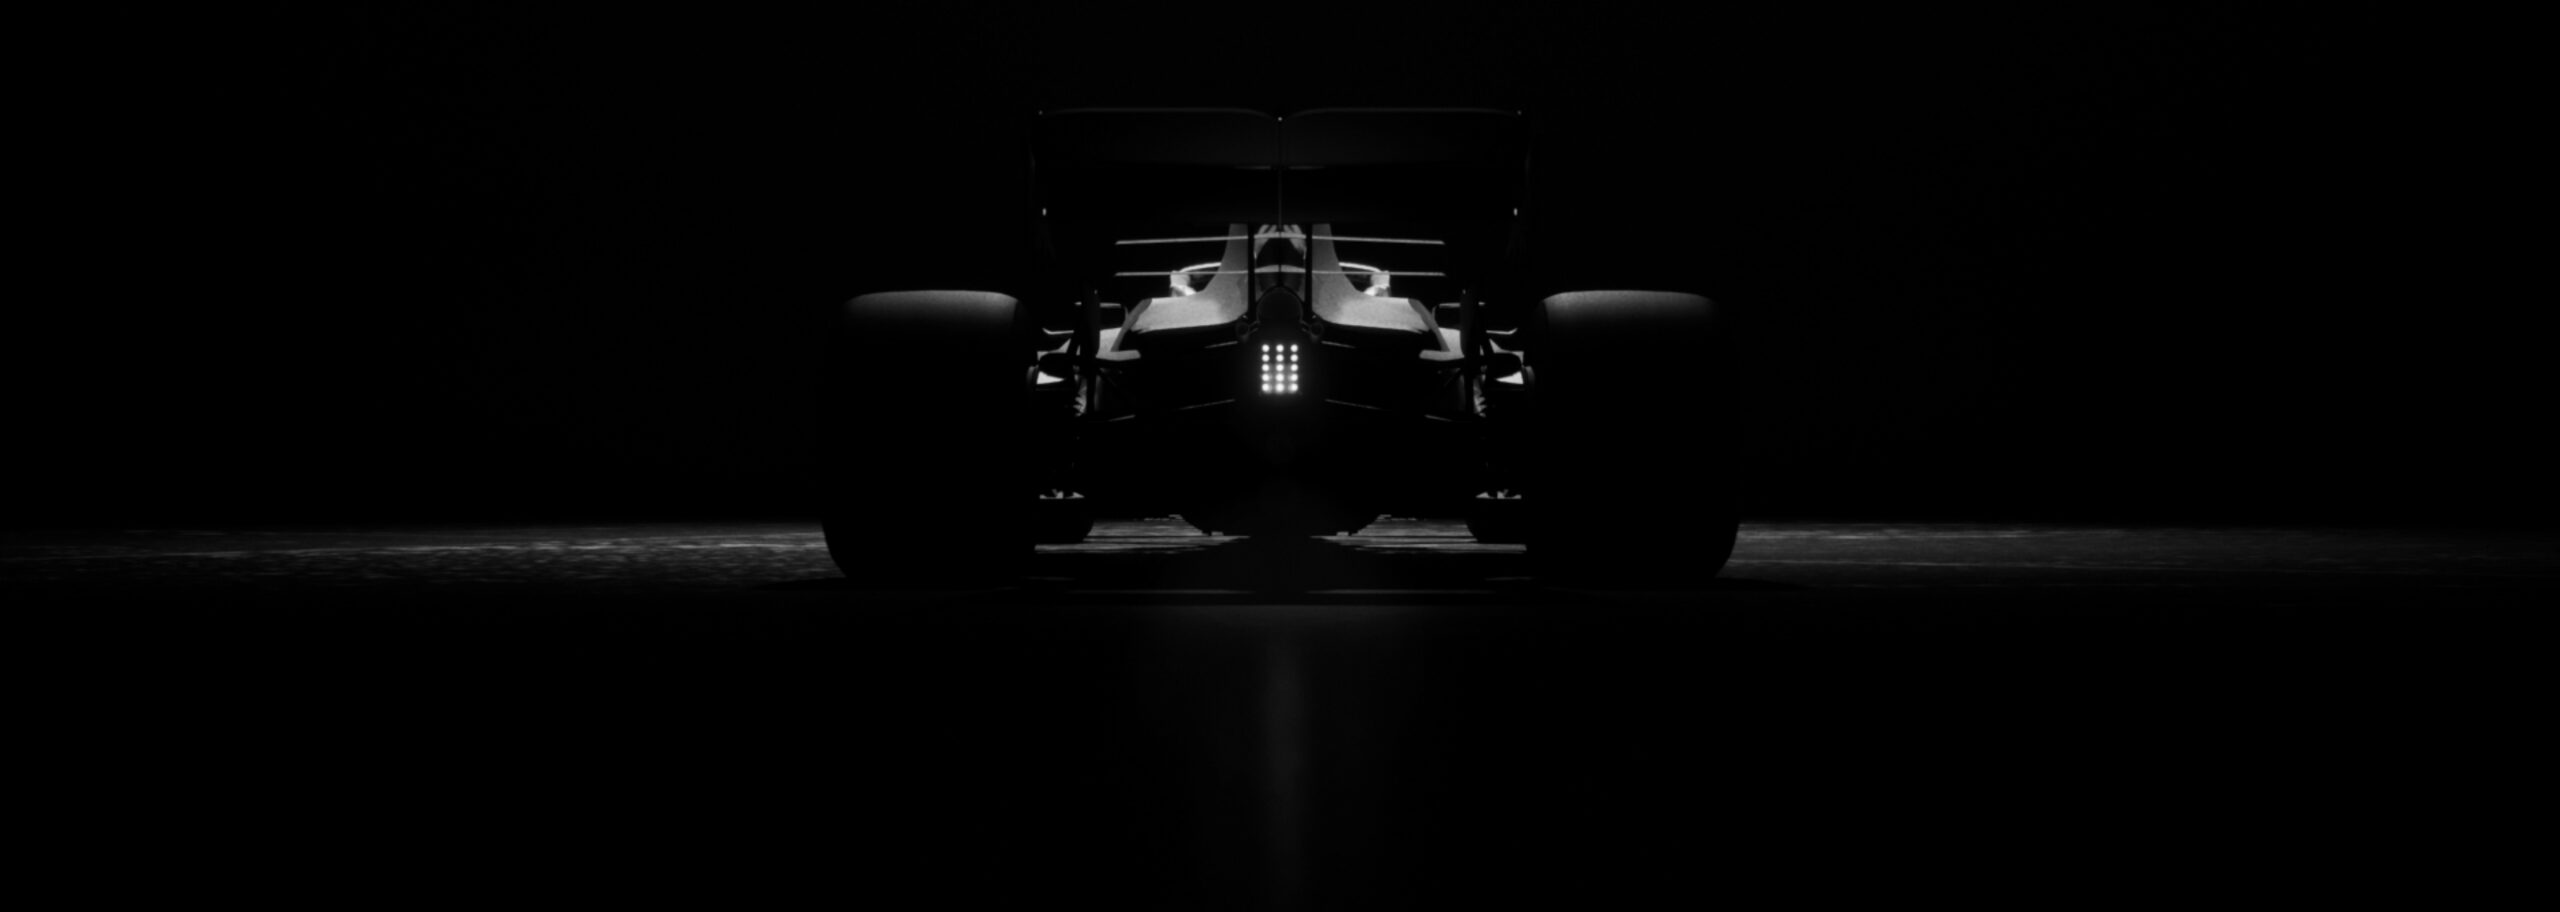 F1-Unreal-Engine-Stills_4.2.1-1